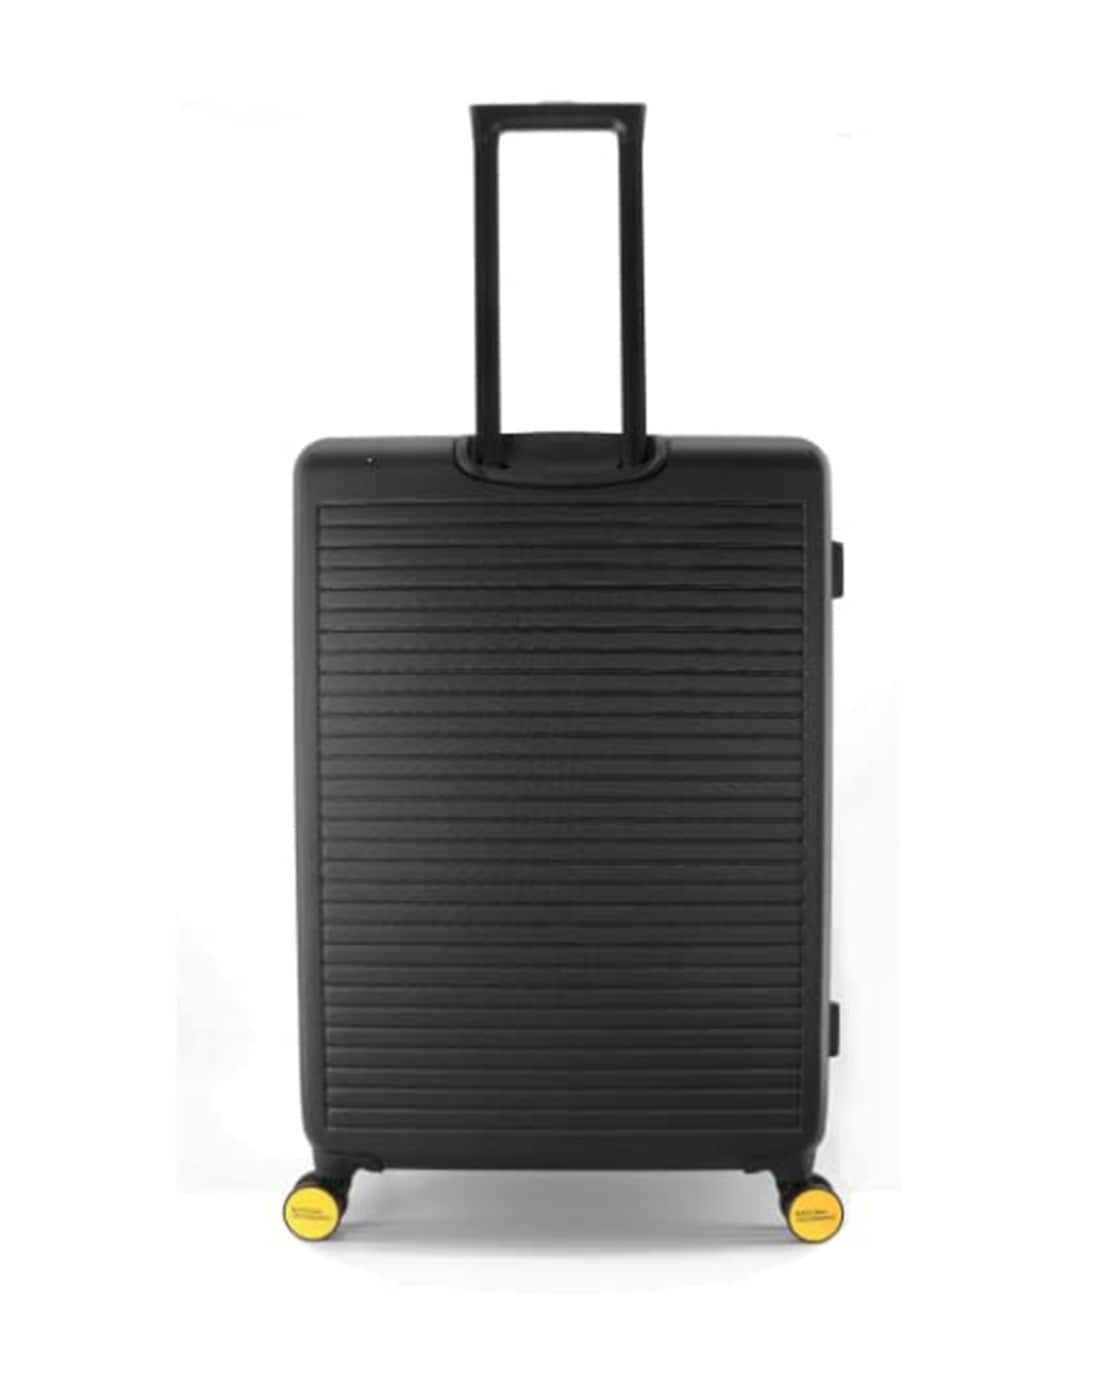 Buy Superdry 7742190 Sd 24 Hardcase Spinner Luggage Bag Bags Online   Best Price Superdry 7742190 Sd 24 Hardcase Spinner Luggage Bag Bags   Justdial Shop Online